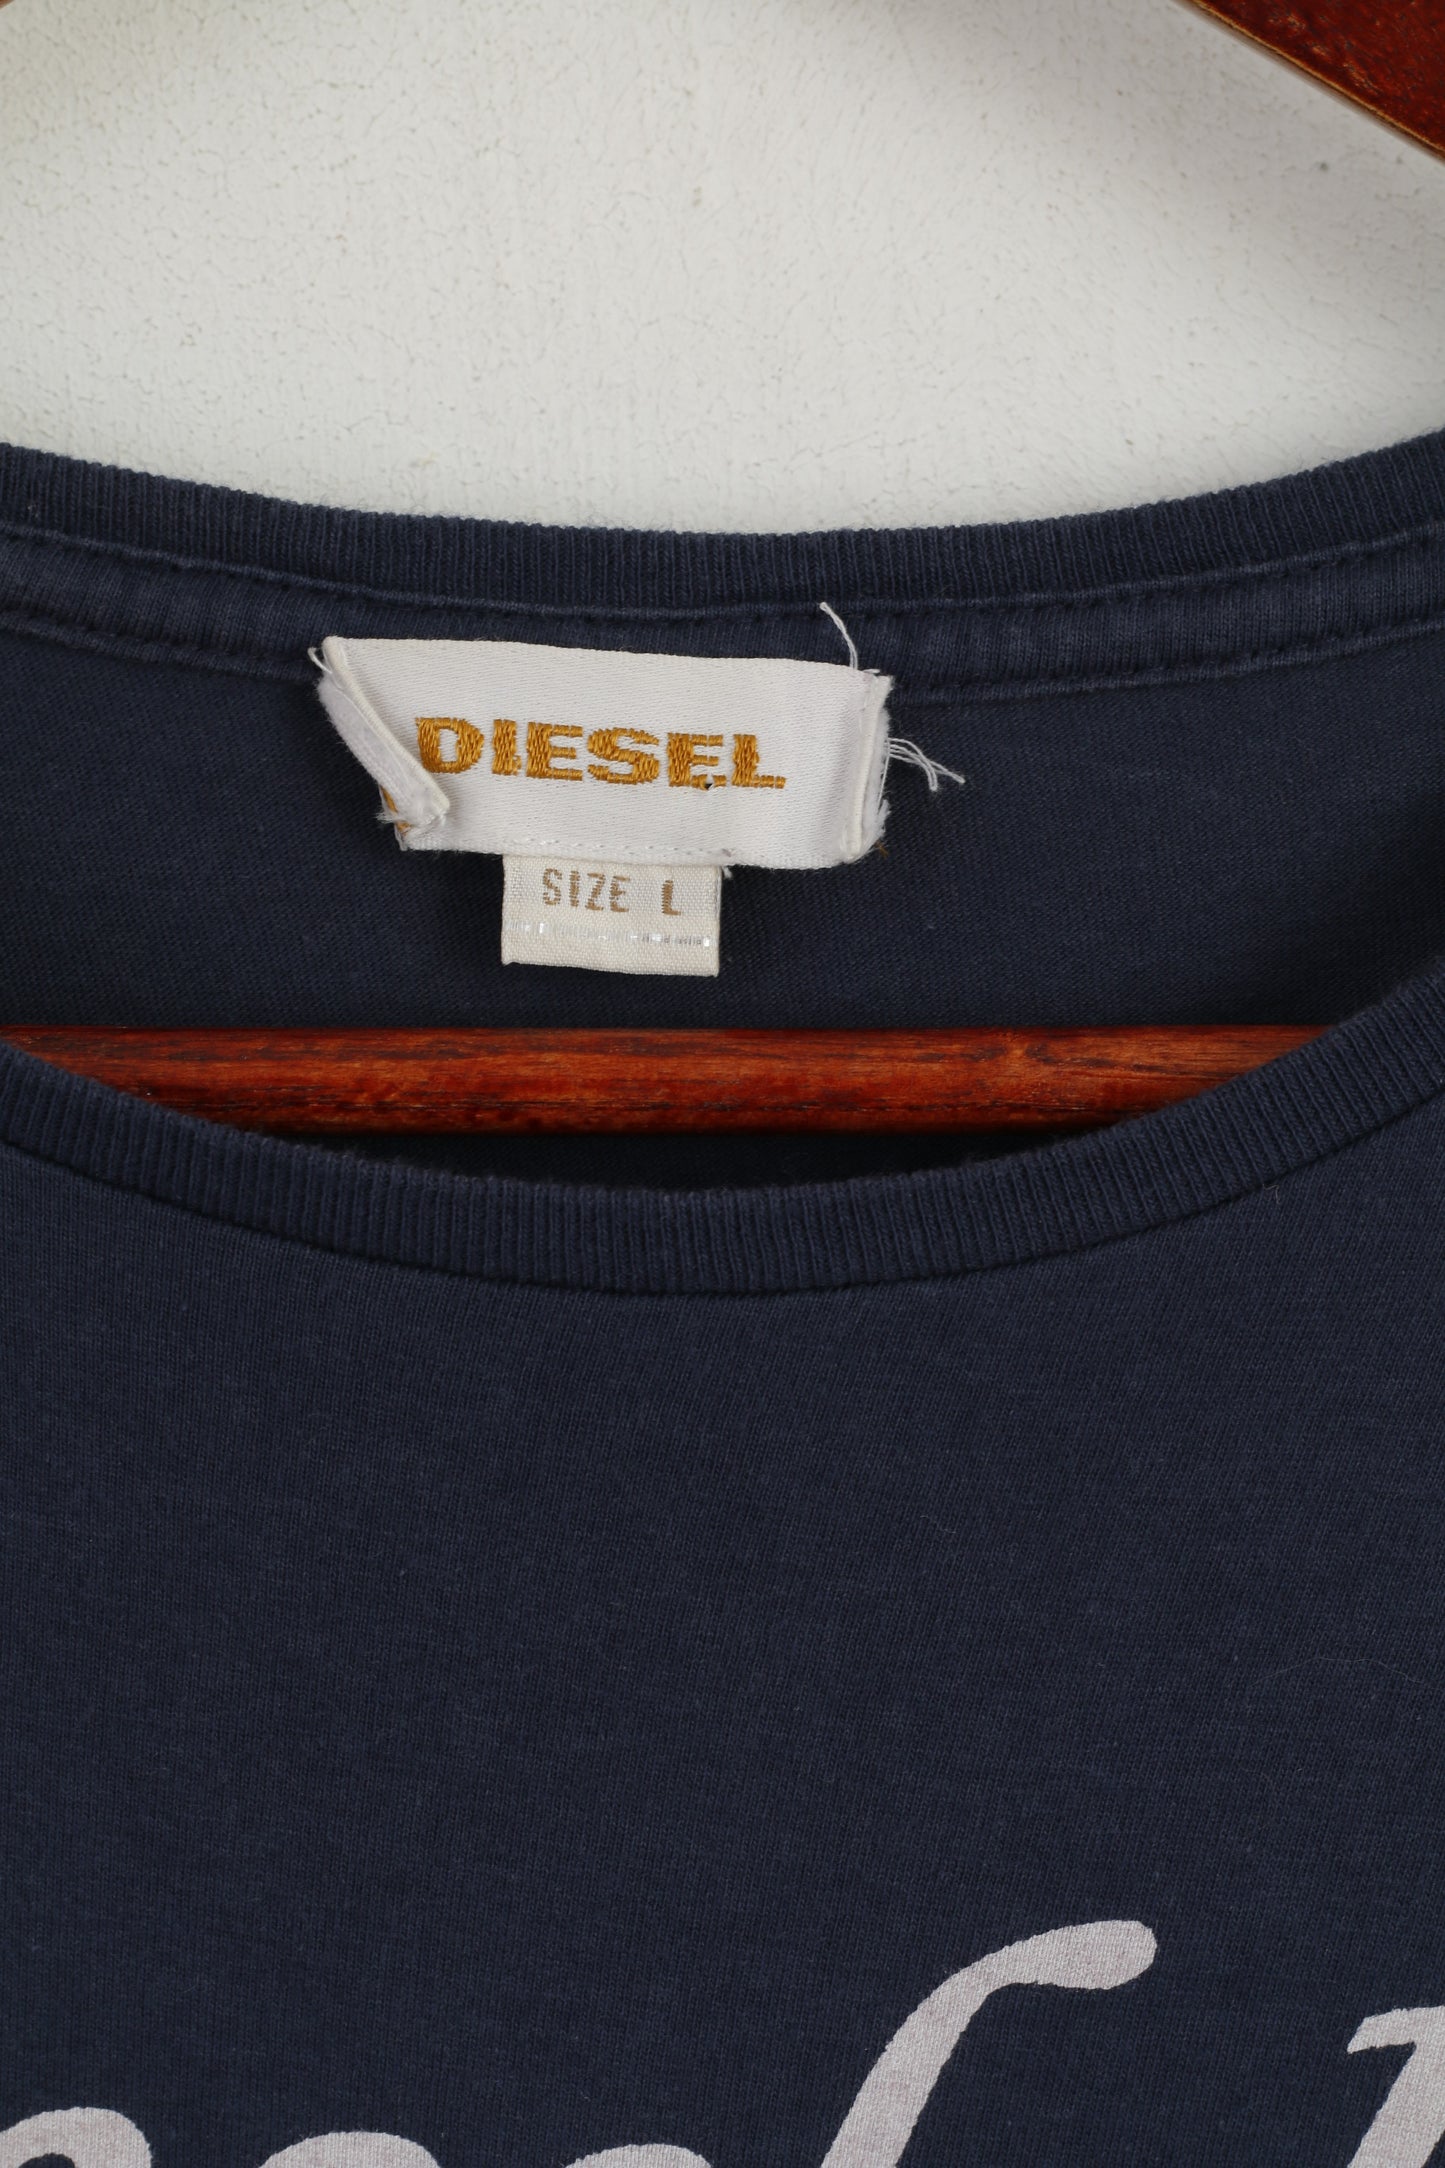 Diesel Ind Womens L T-Shirt Crew Neck Graphic Navy Cotton Top